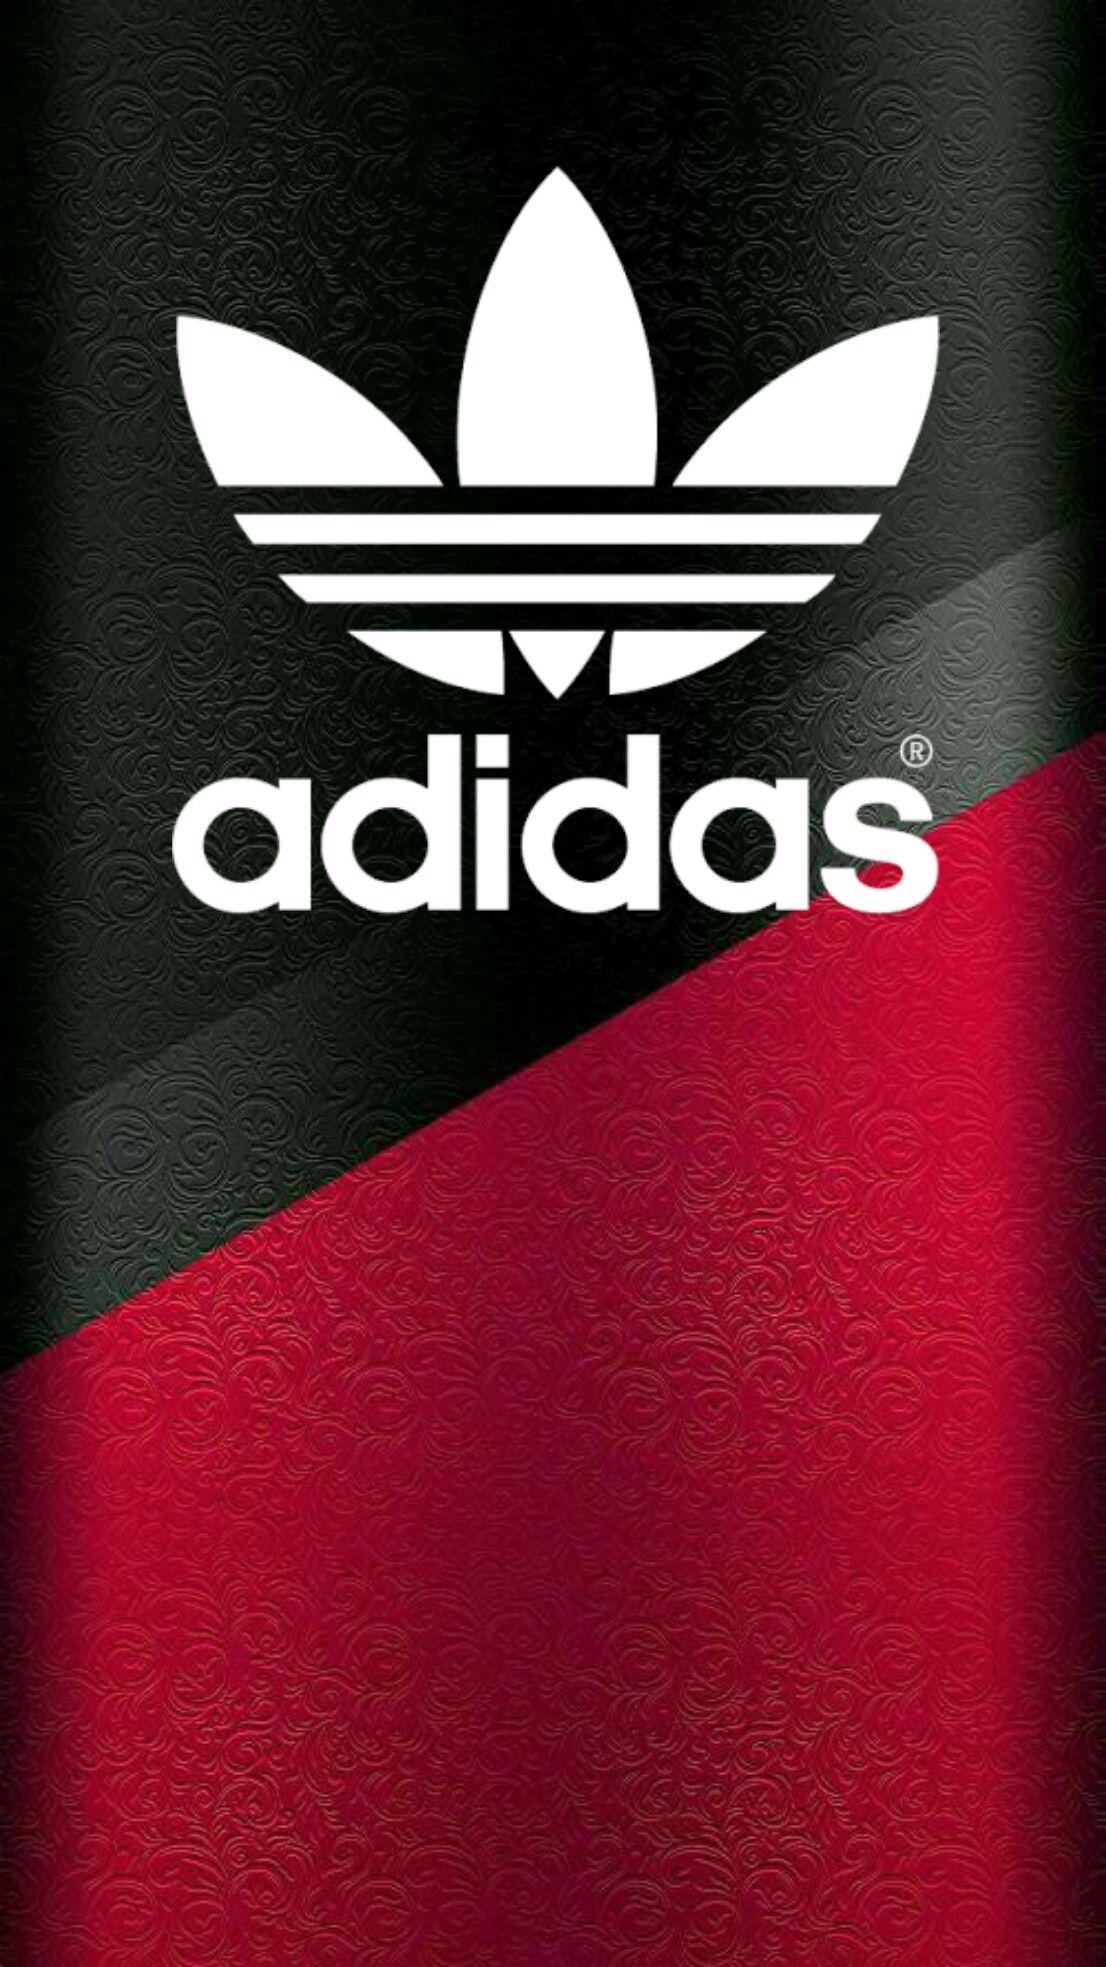 Adidas Wallpaper Hd Celular New Daily Offers Ruhof Co Uk